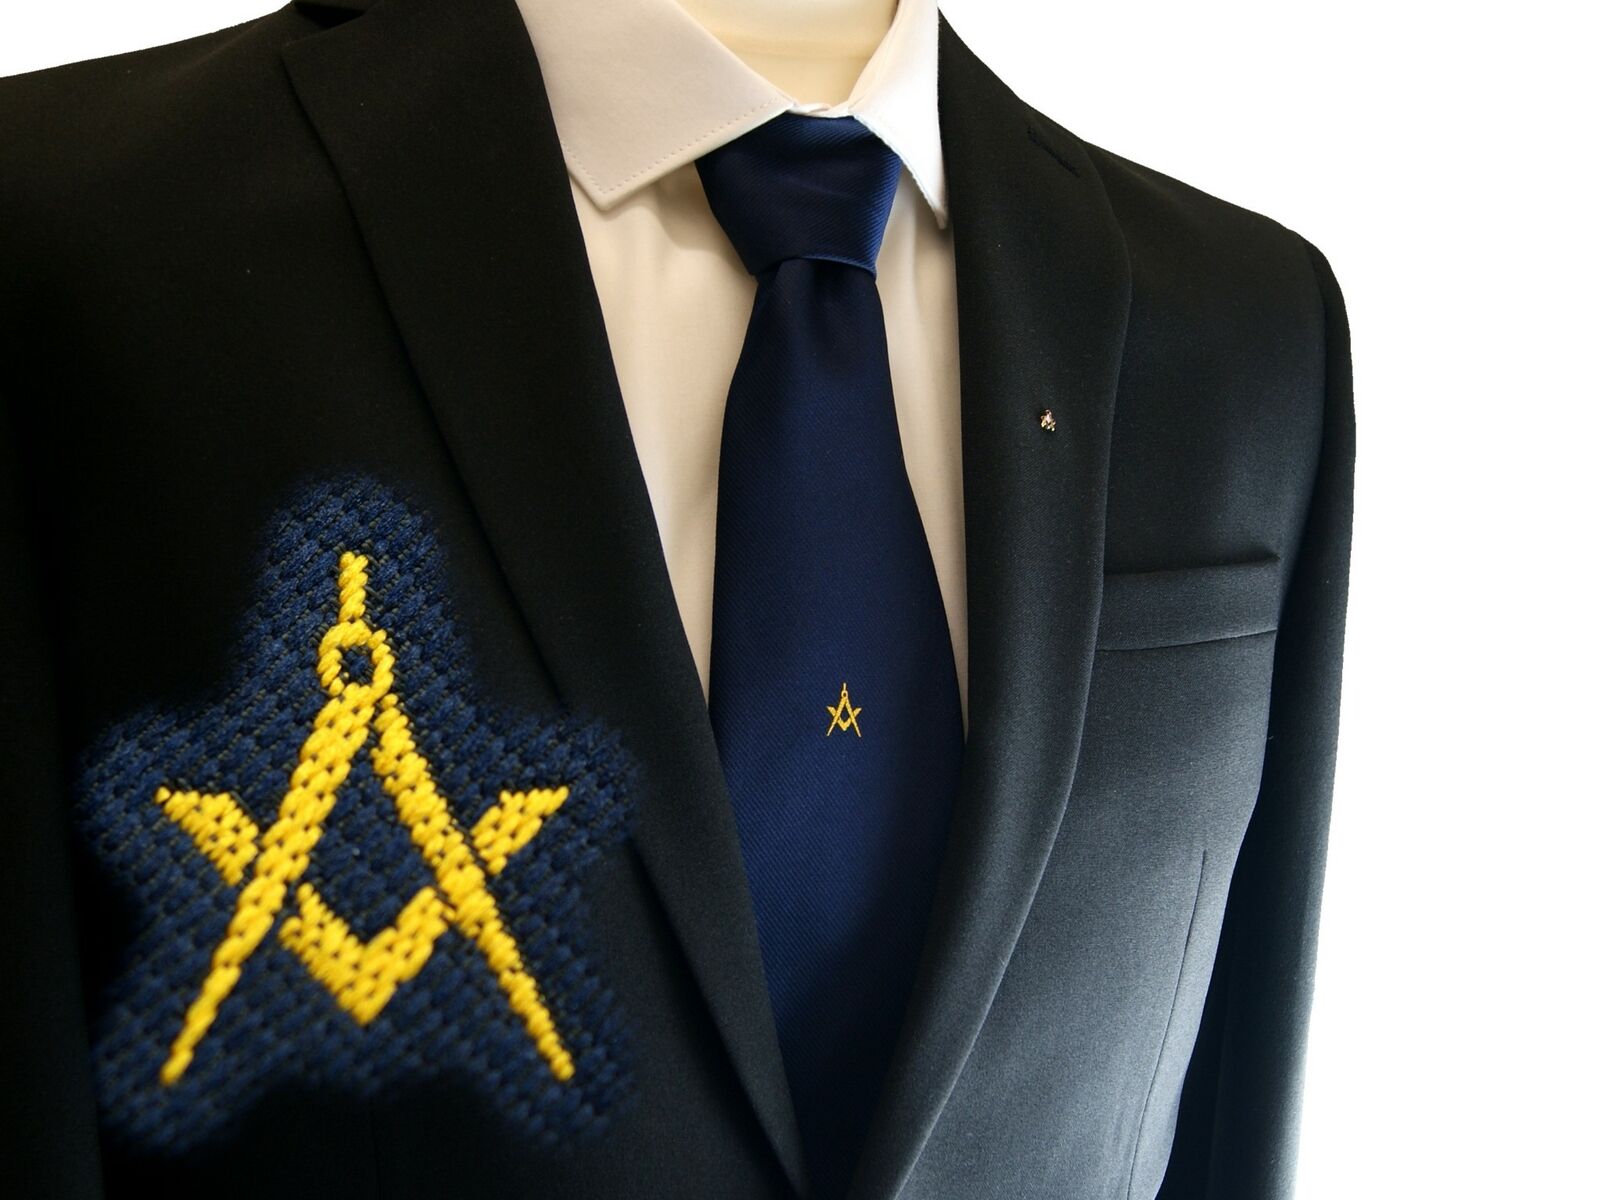  Freemasons Masonic Woven Tie Navy Blue Square Compasses